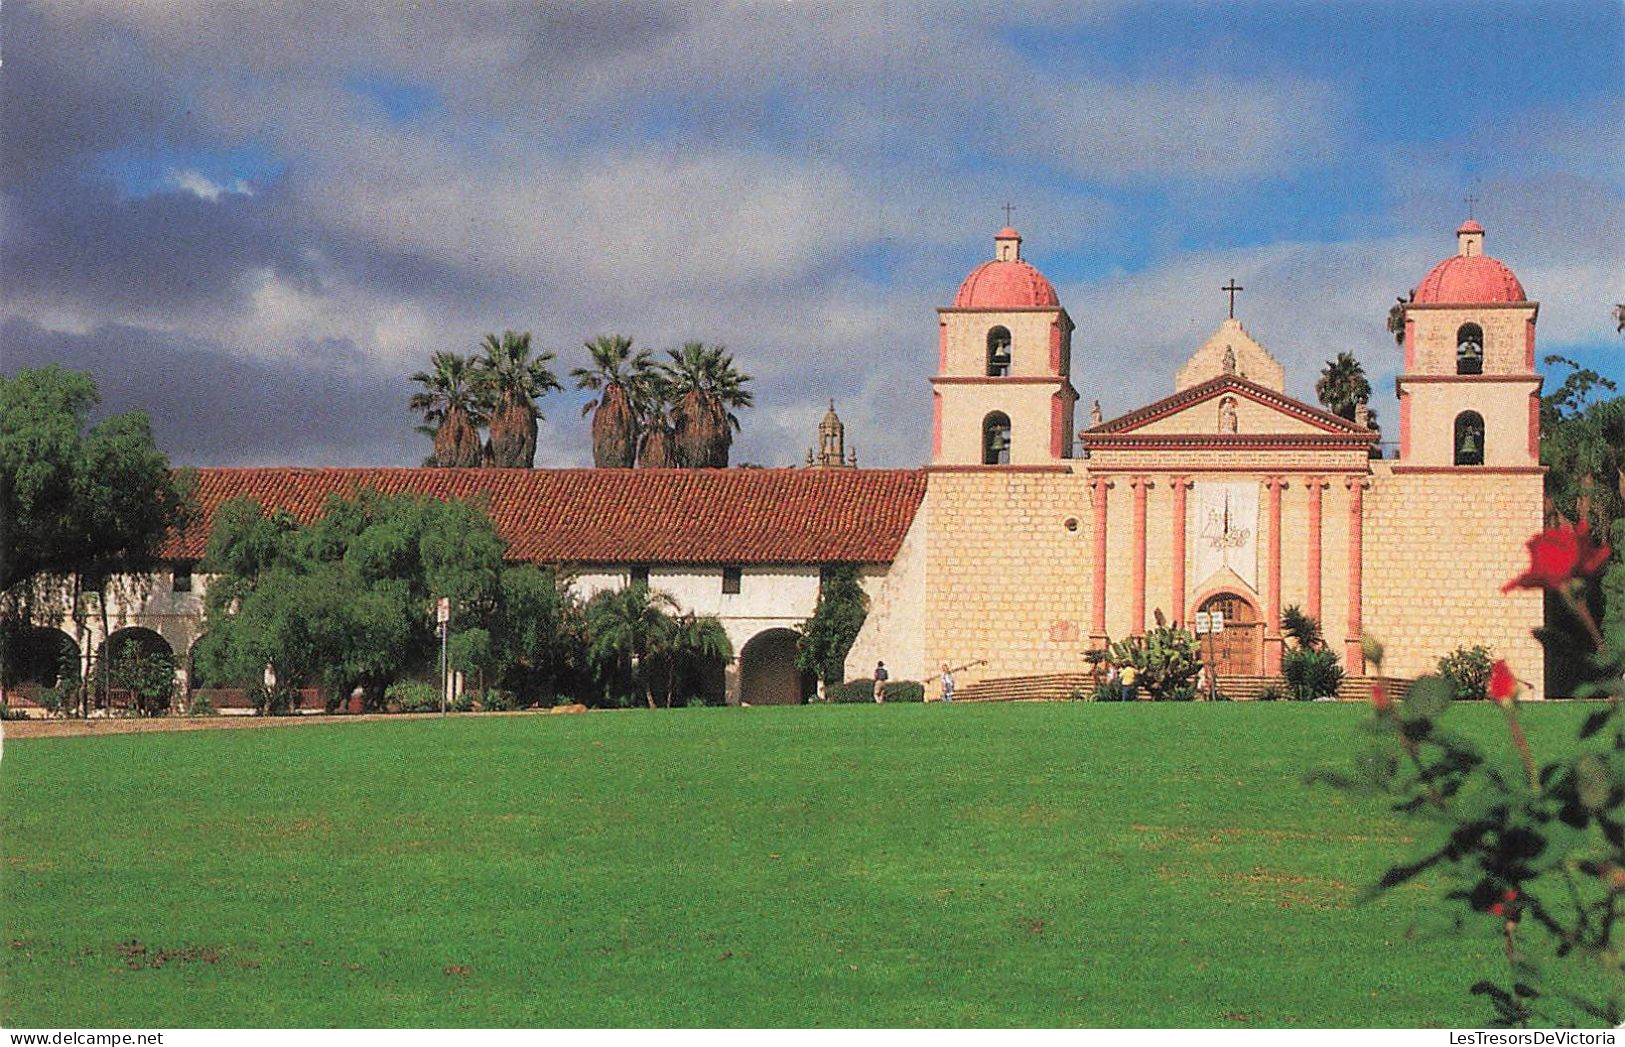 ETATS-UNIS - Santa Barbara - Santa Barbara's Old Mission - Colorisé - Carte Postale - Santa Barbara